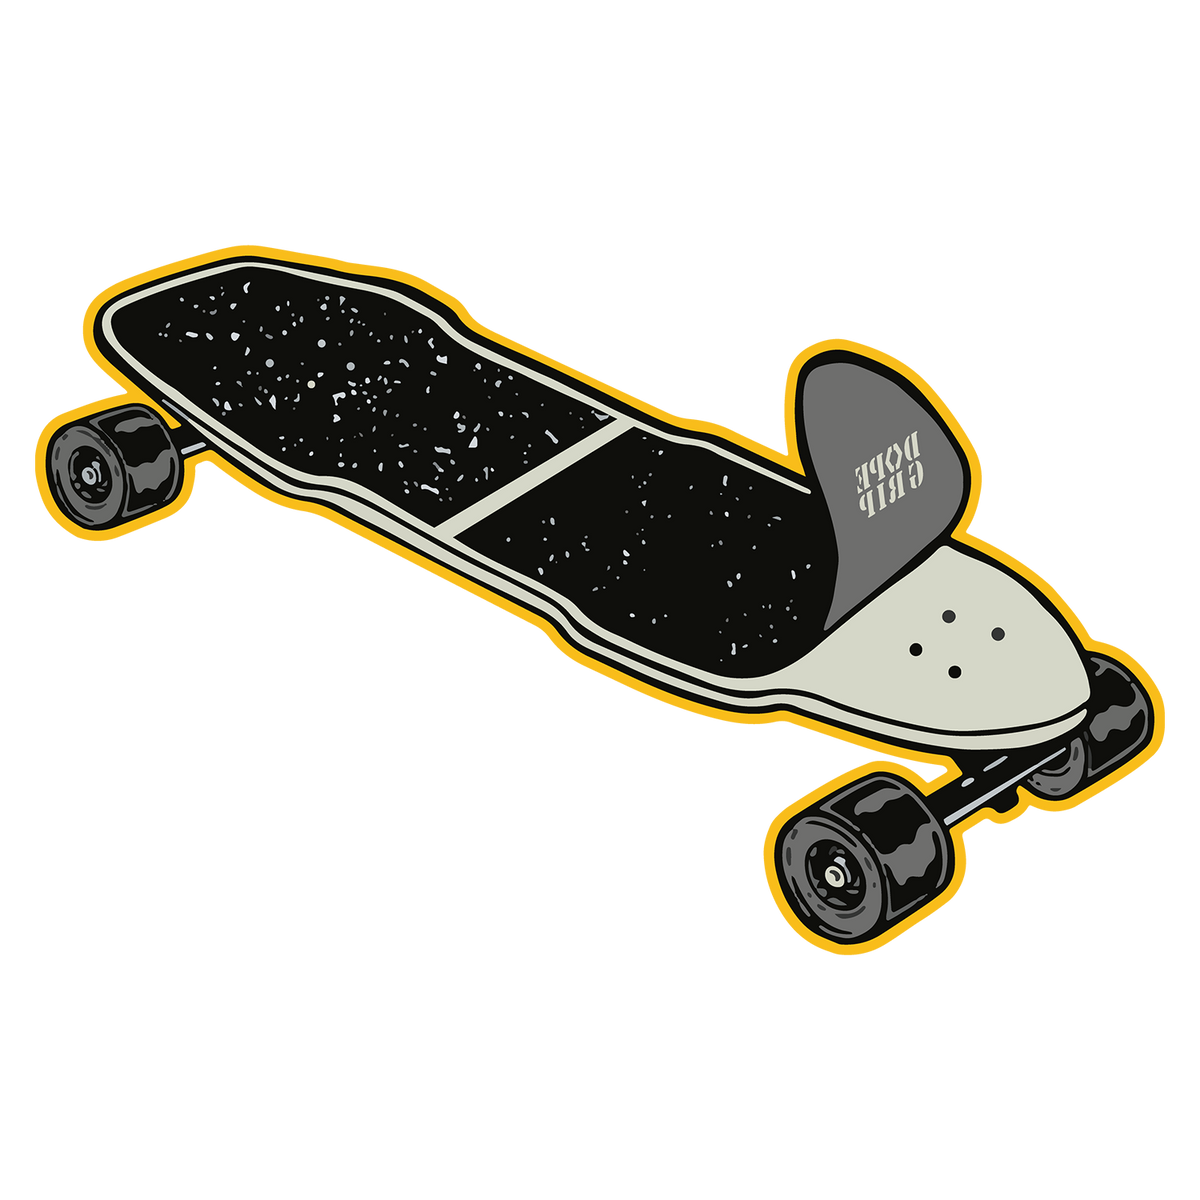 Skate Griptape - Directive Boardshop